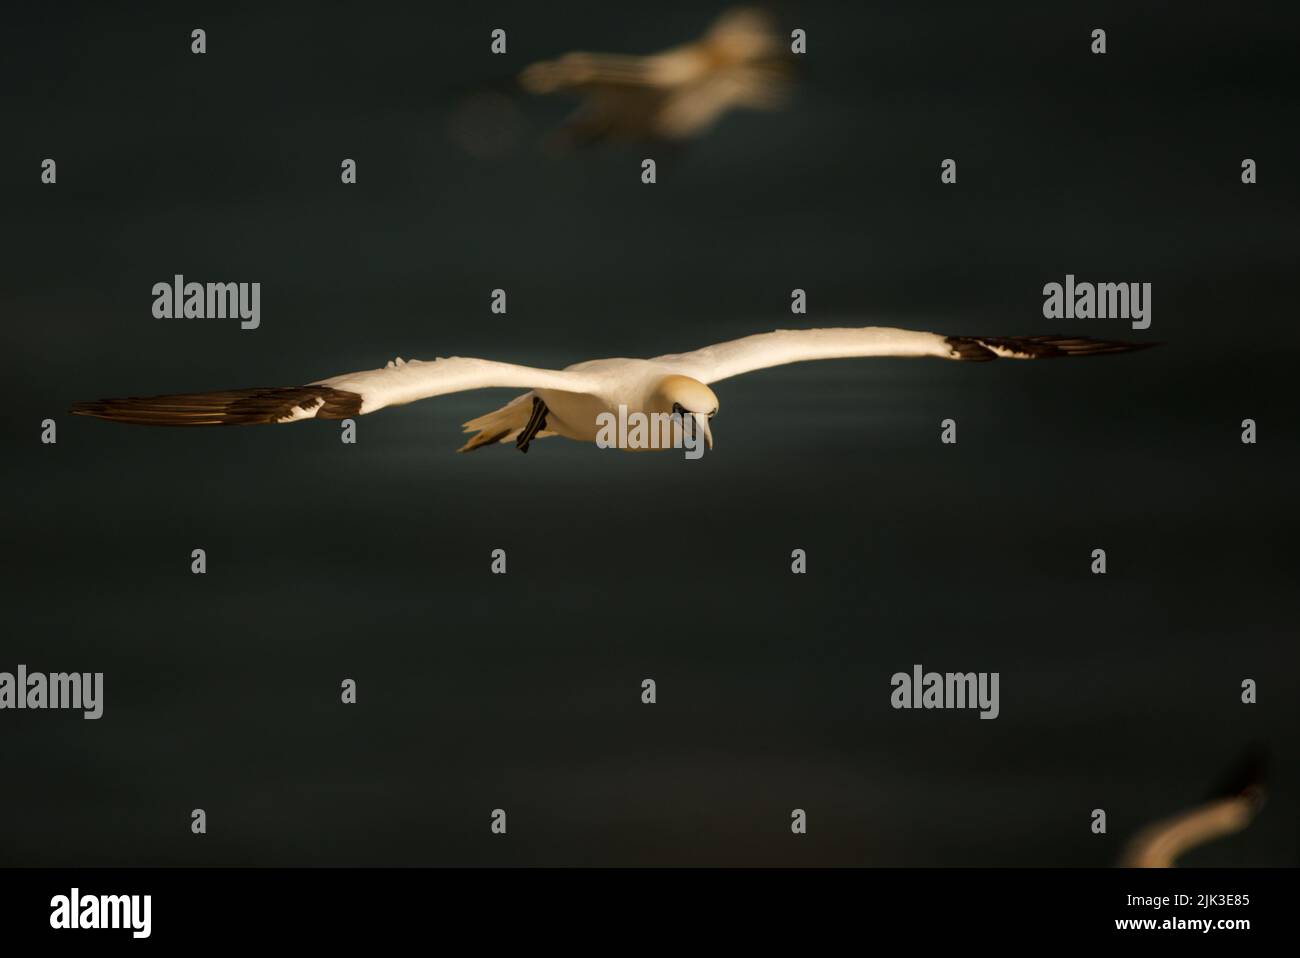 Northern Gannet in flight (Morus bassanus), Gannet flying over water. Stock Photo